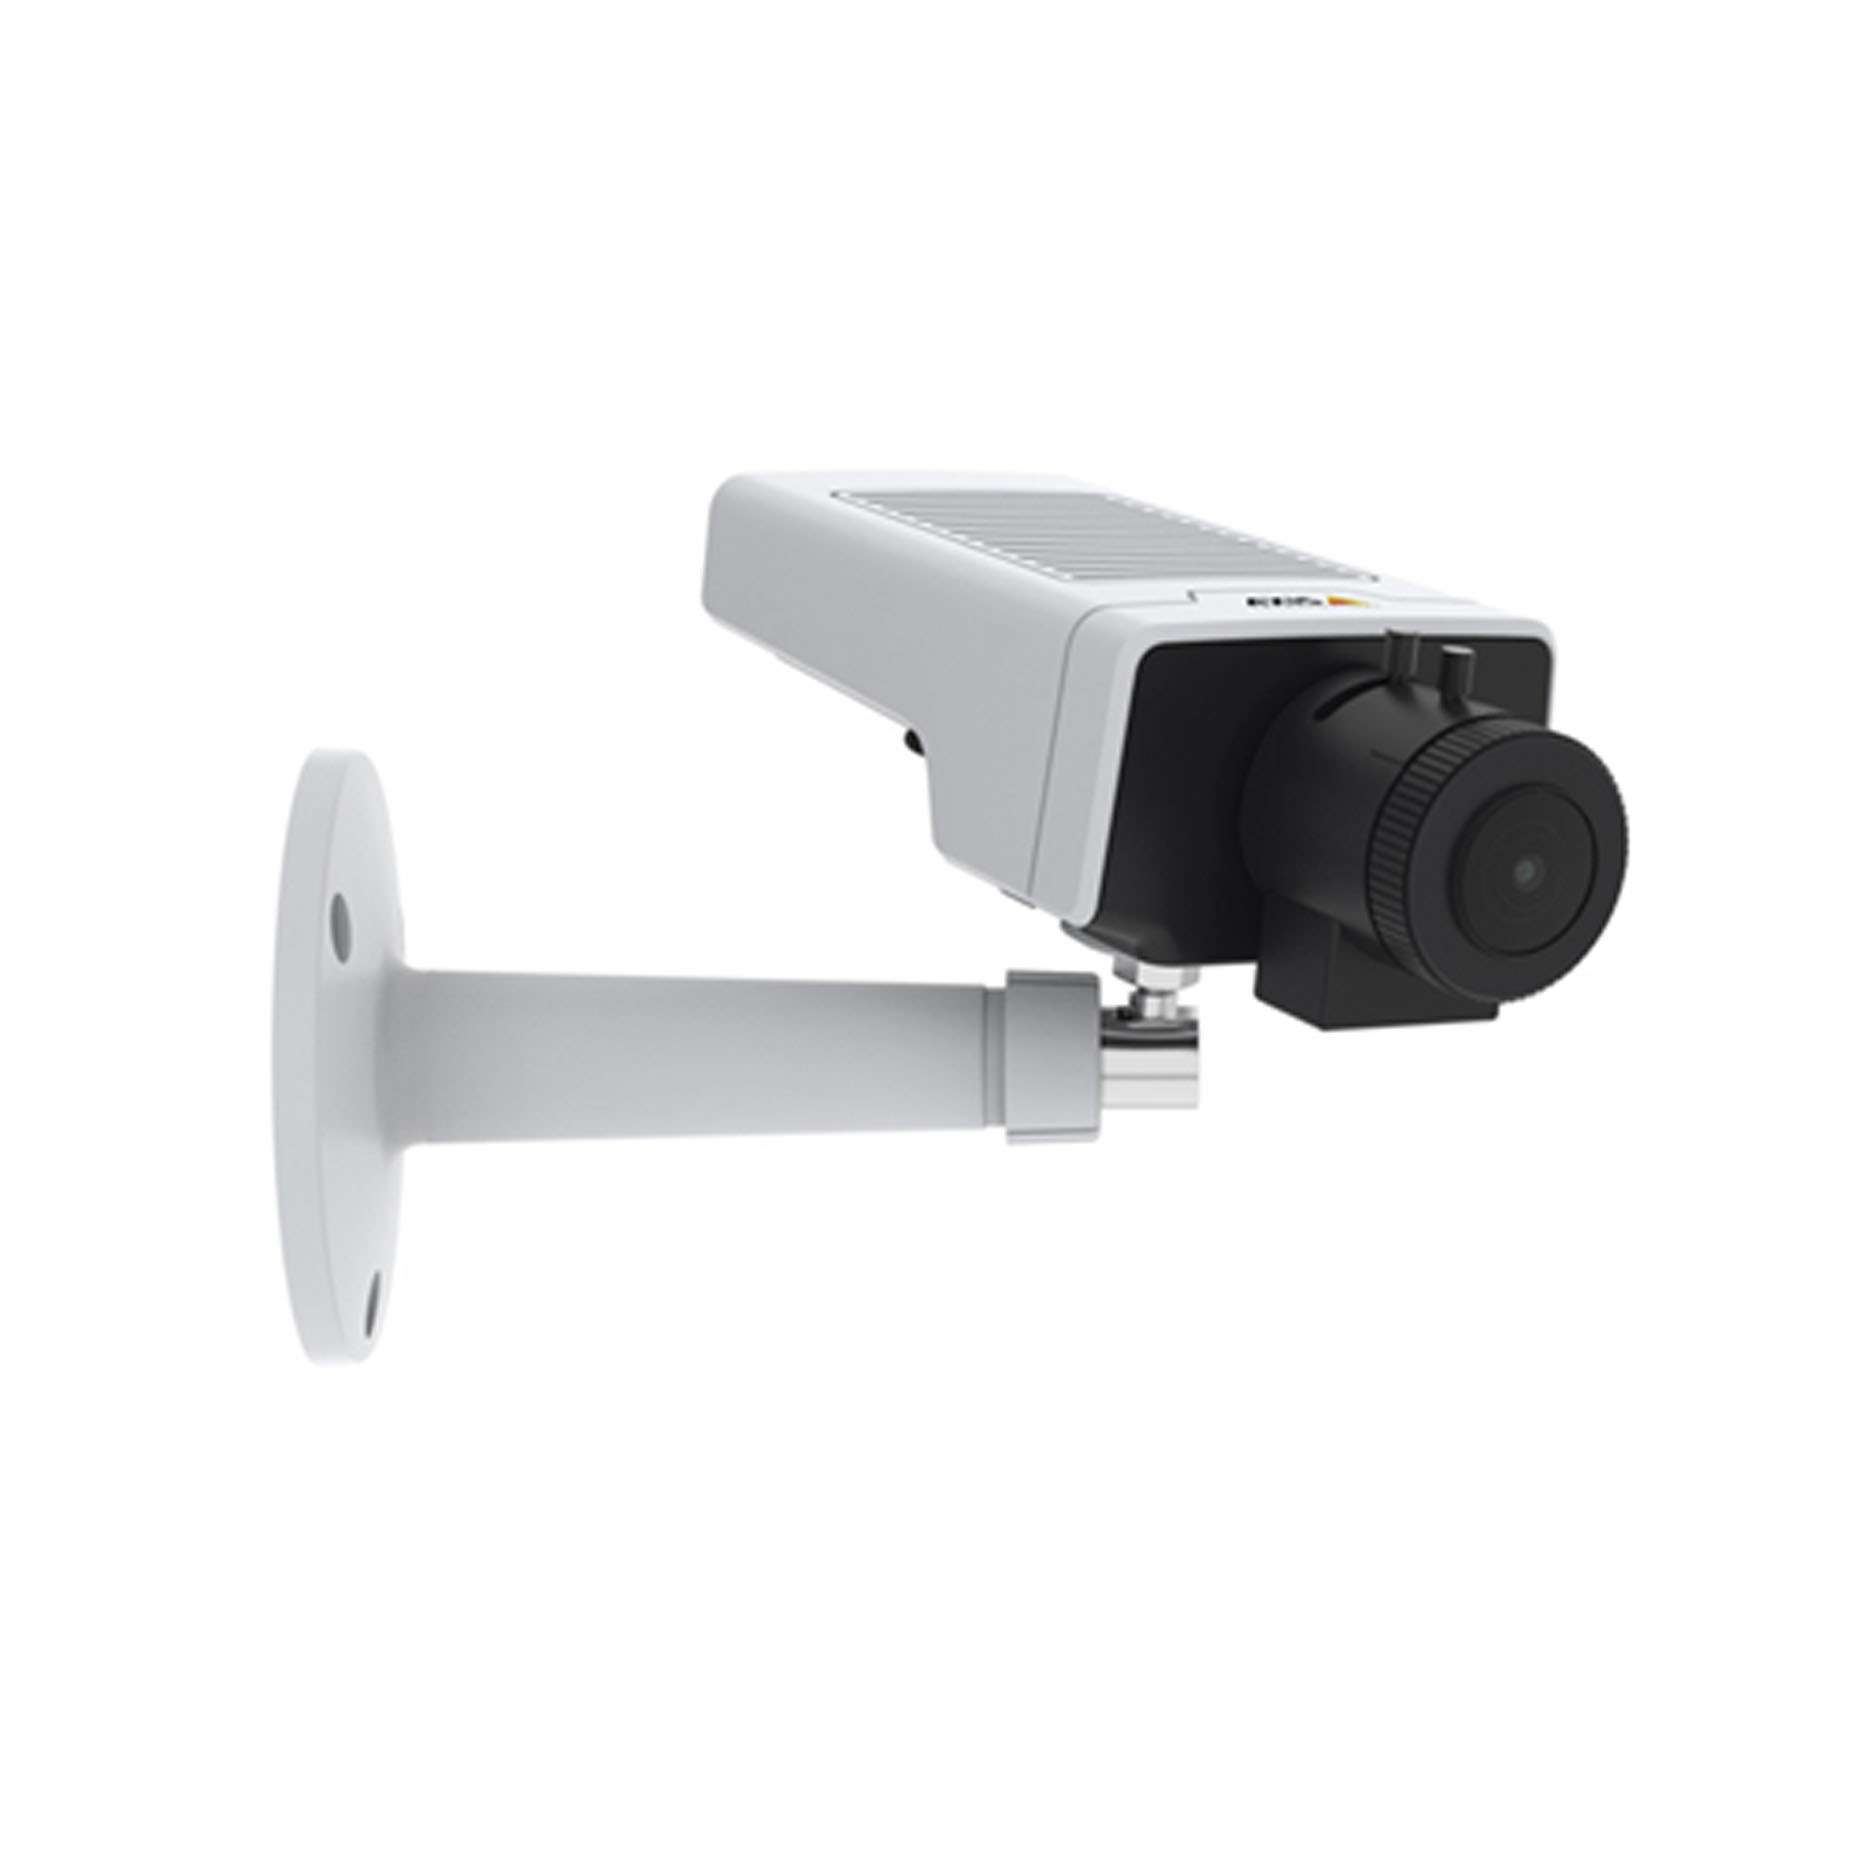 Harga Jual AXIS M1134 Network Camera HDTV 720p Premium Affordable Surveillance